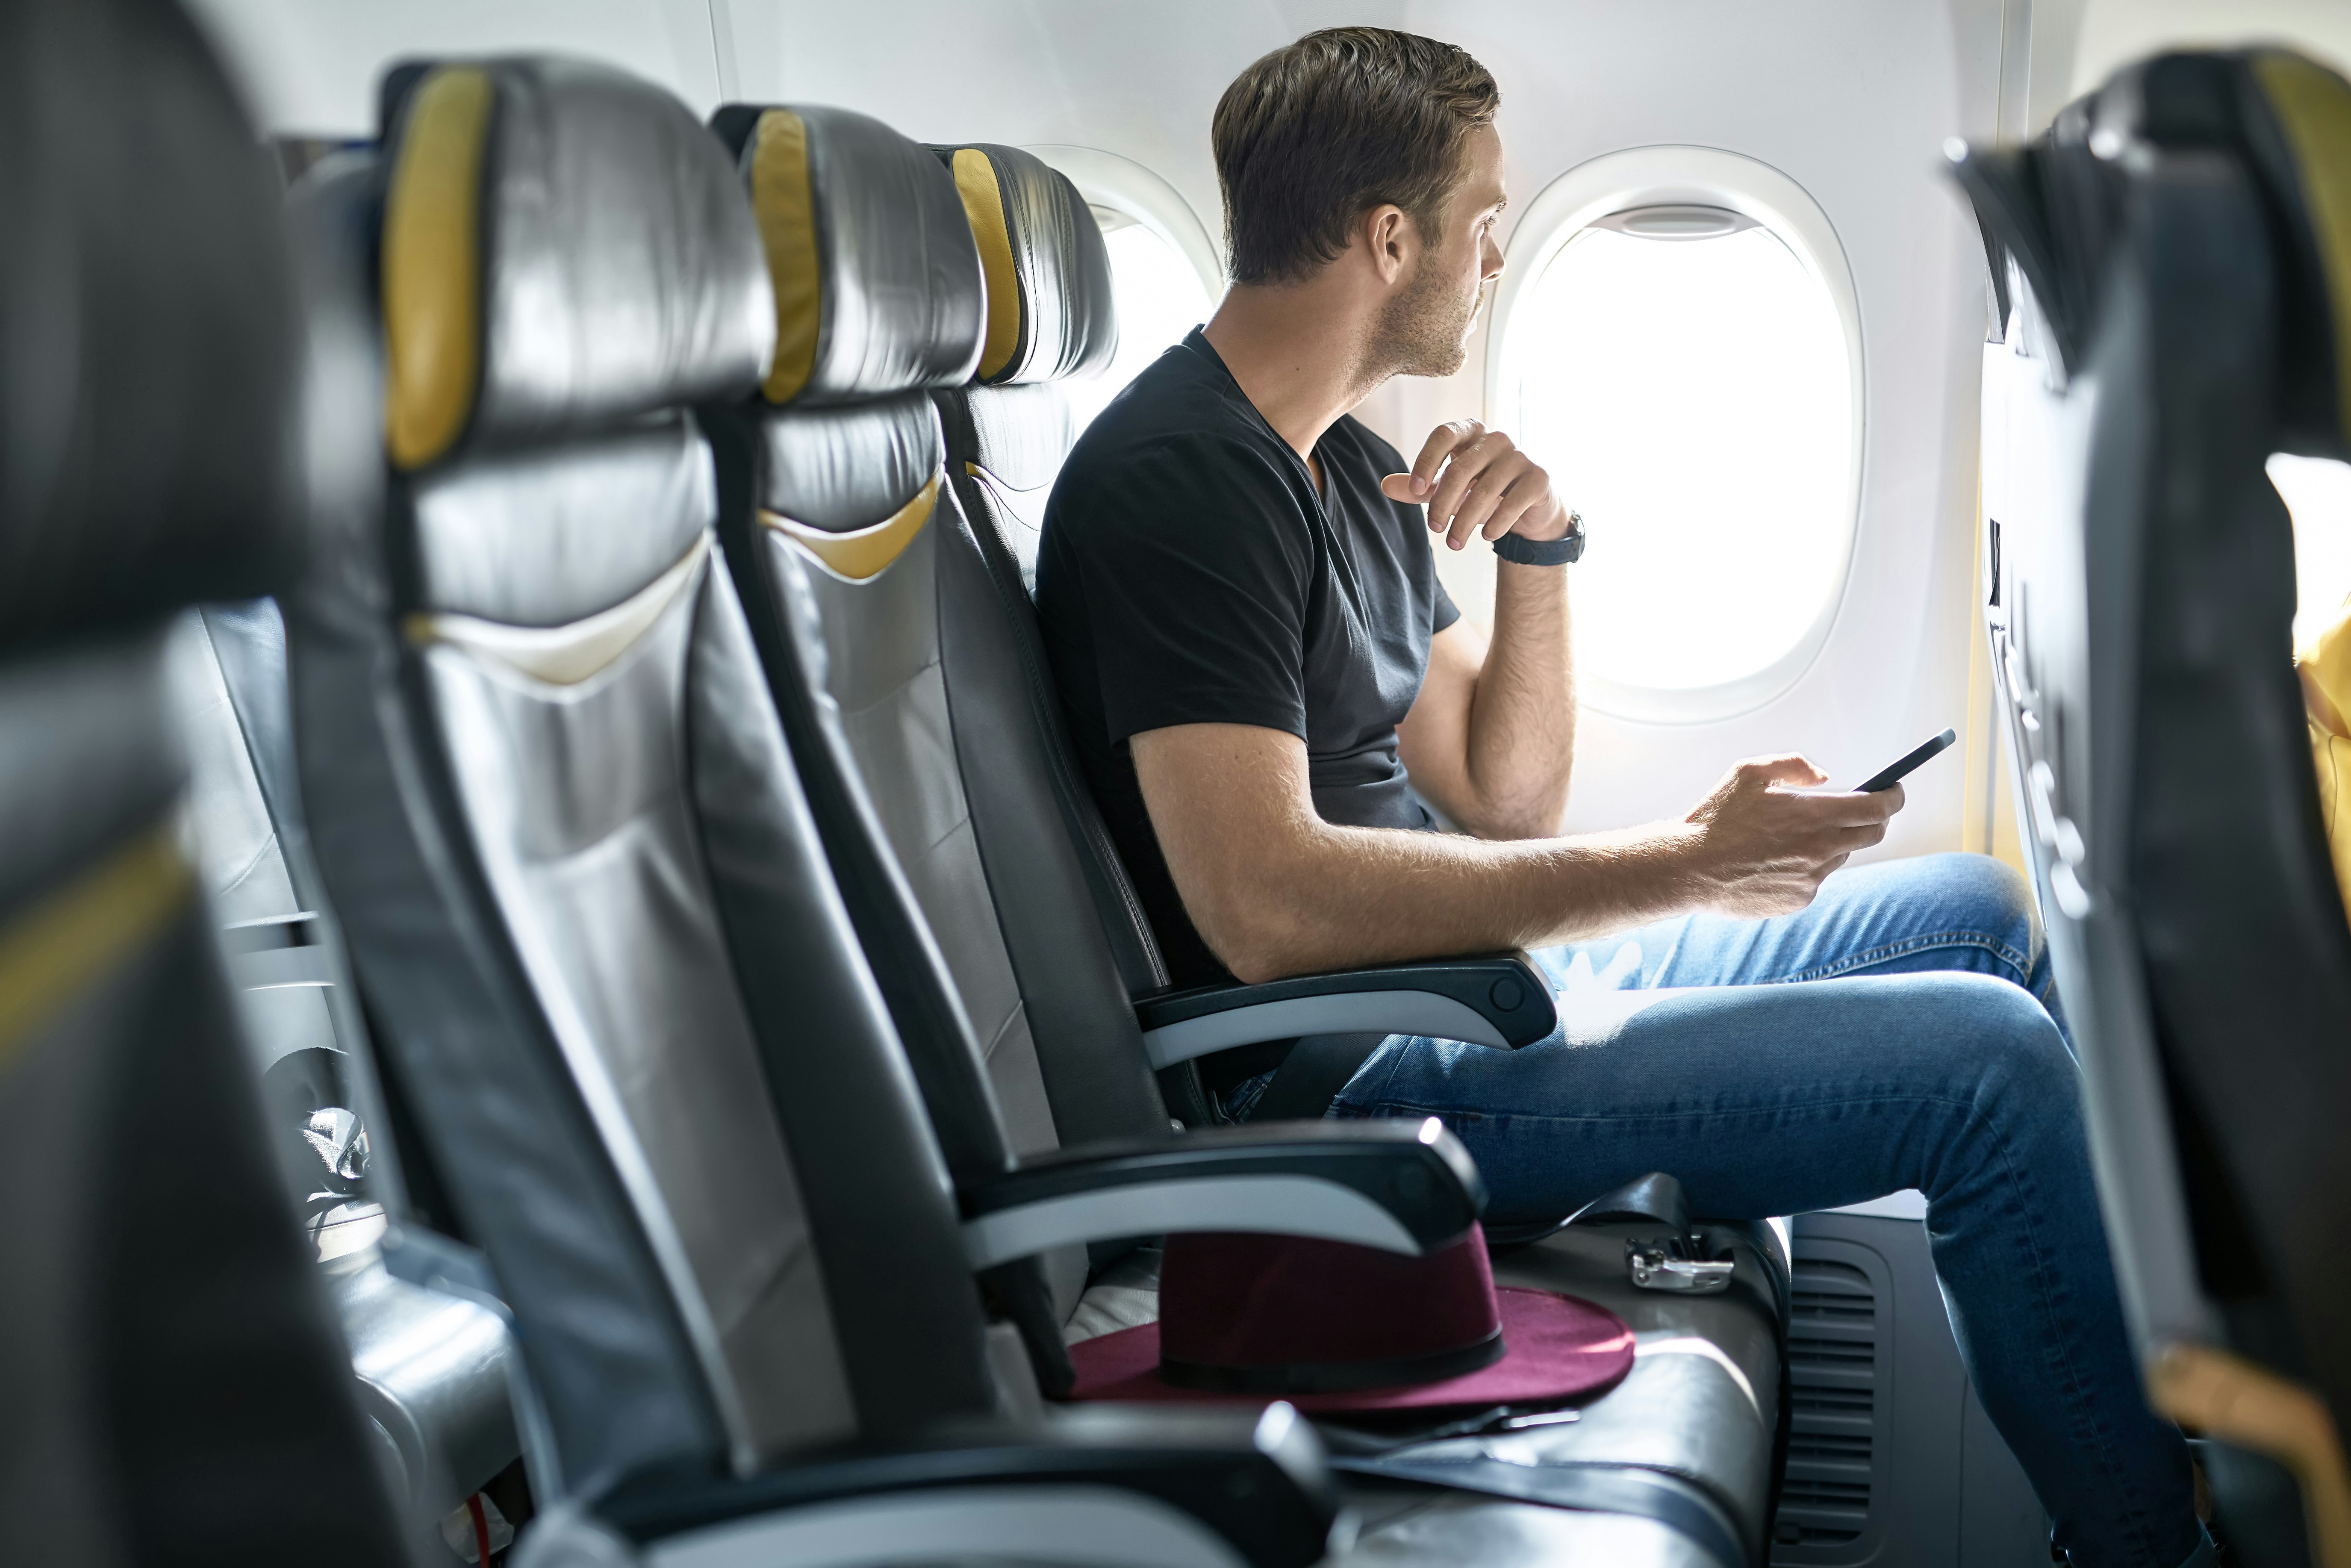 Row of seats on a plane.jpg